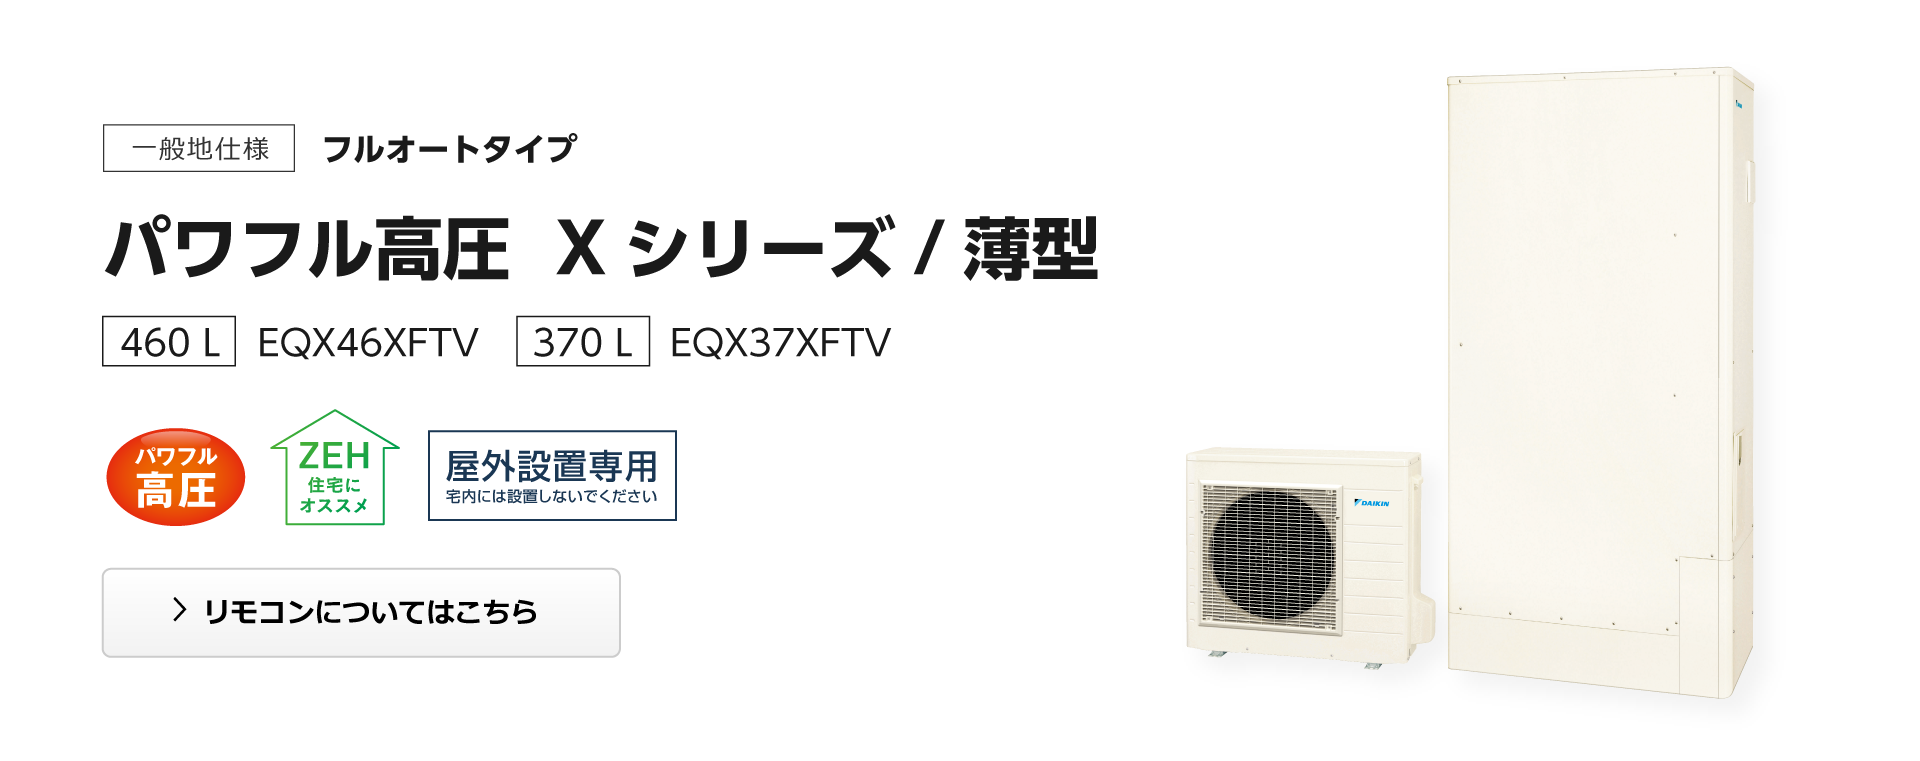 [EQ37XFTV] ダイキン エコキュート 370L 薄型 パワフル高圧 フルオート 屋外設置専用 工事費込み - 5